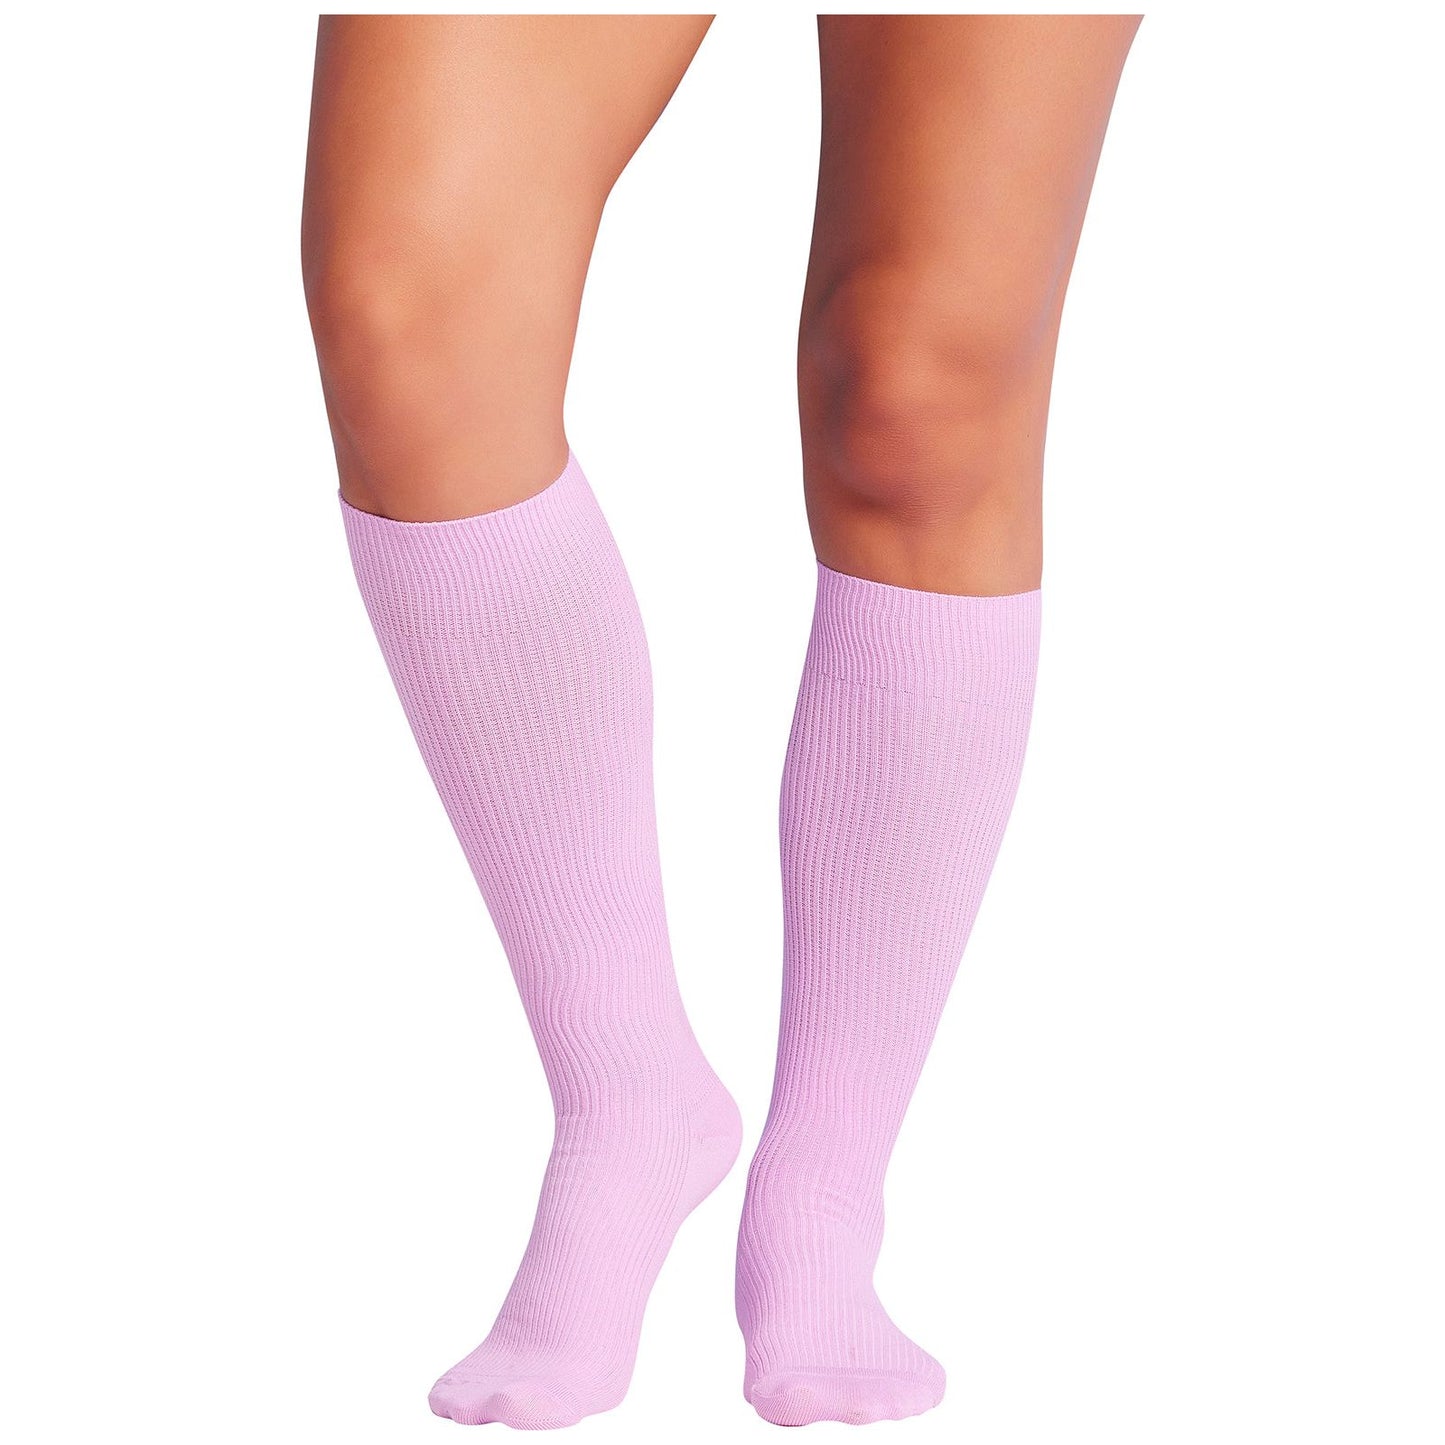 4 single pair of Support Socks